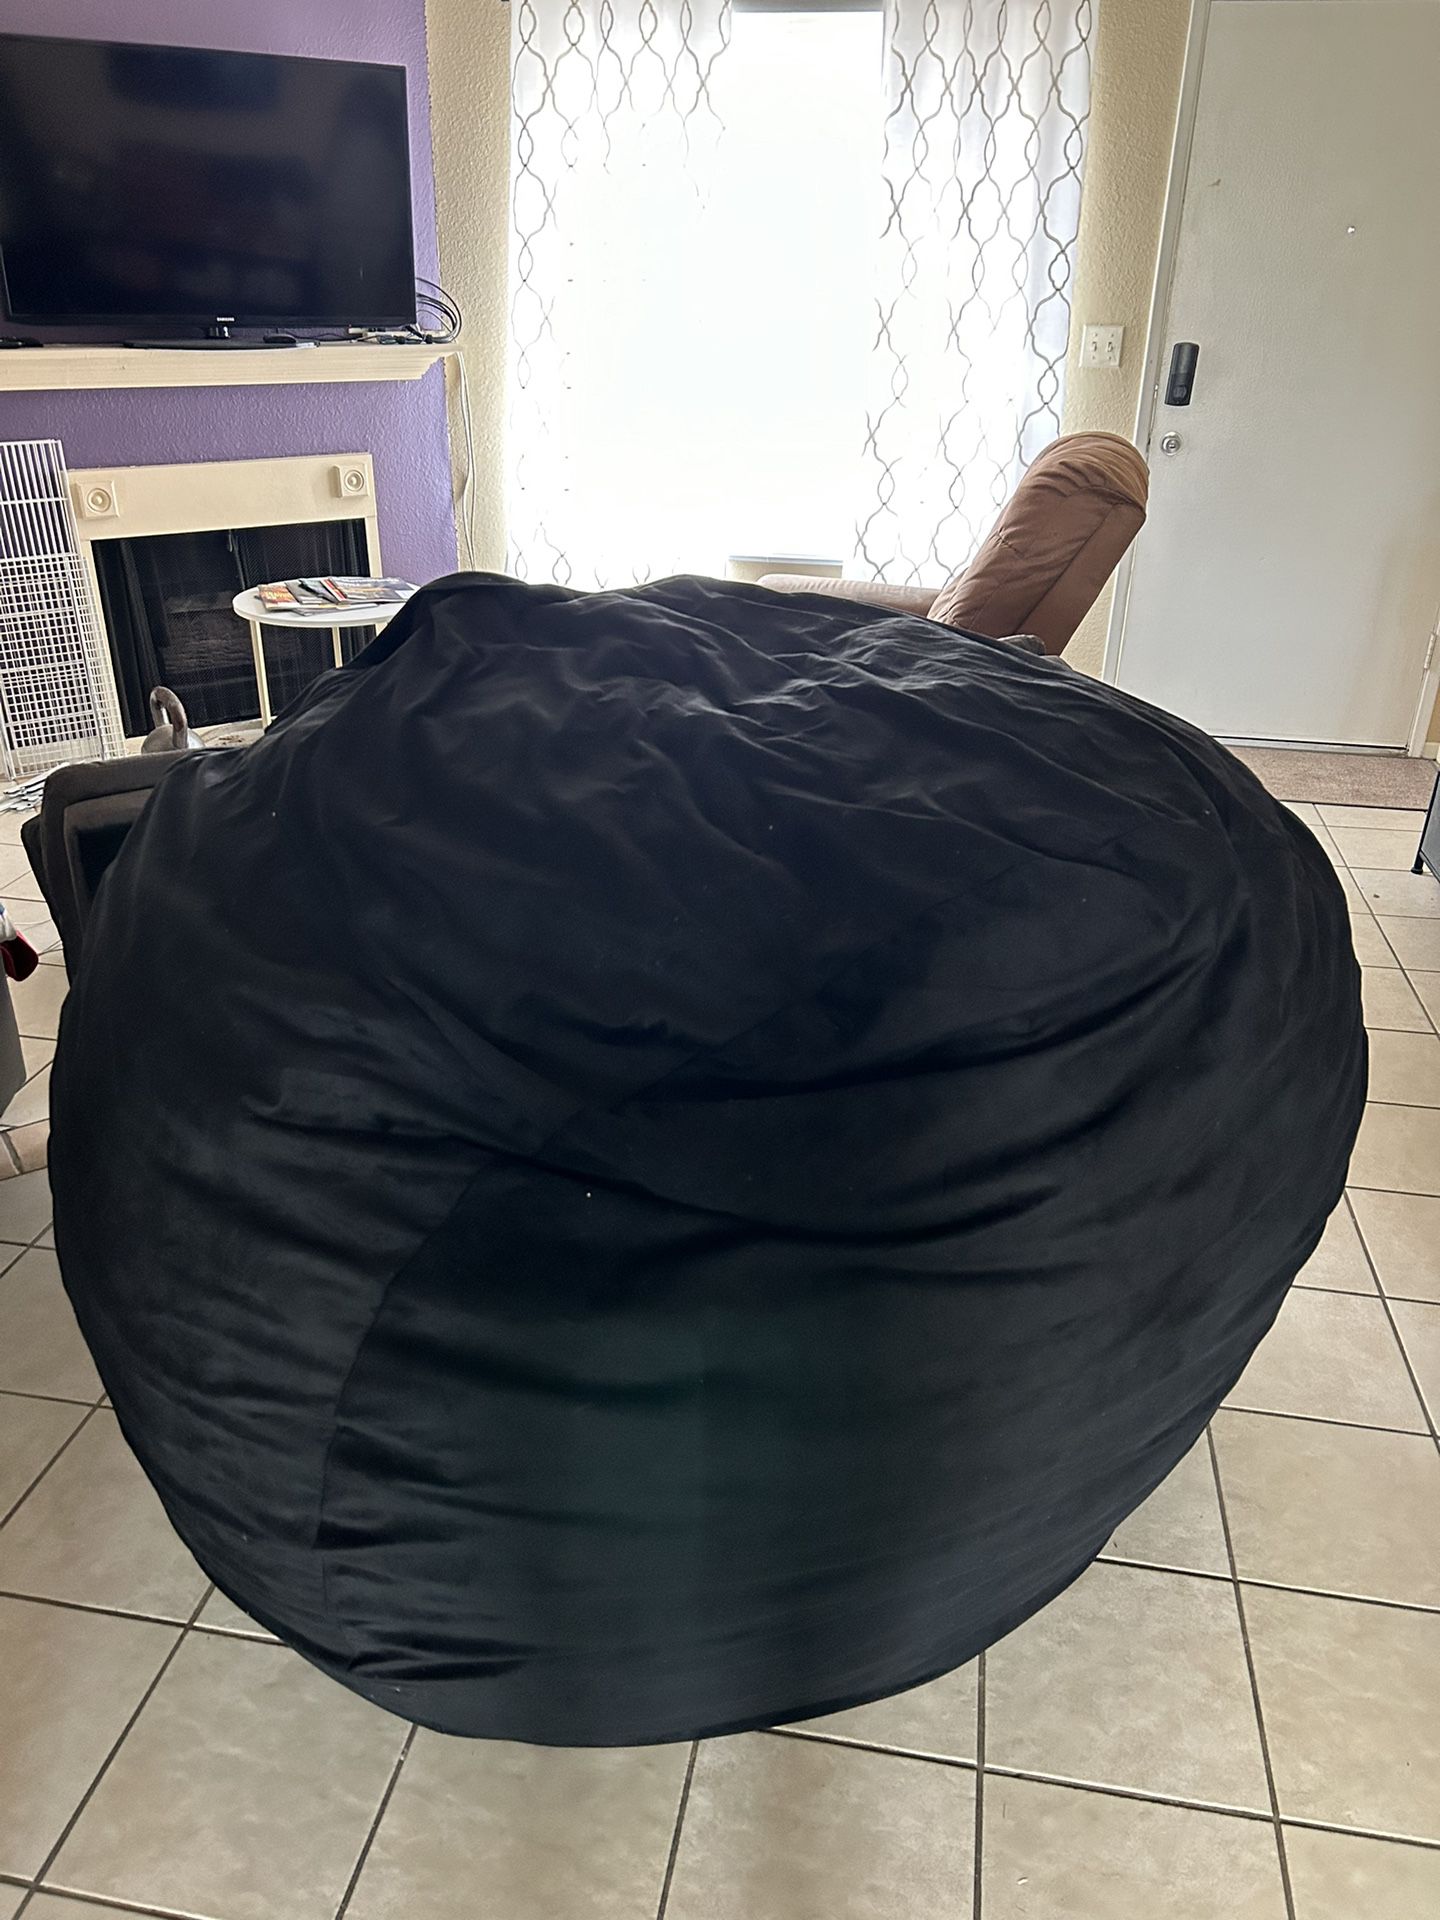 Large Ultimate sack Black Bean Bag 